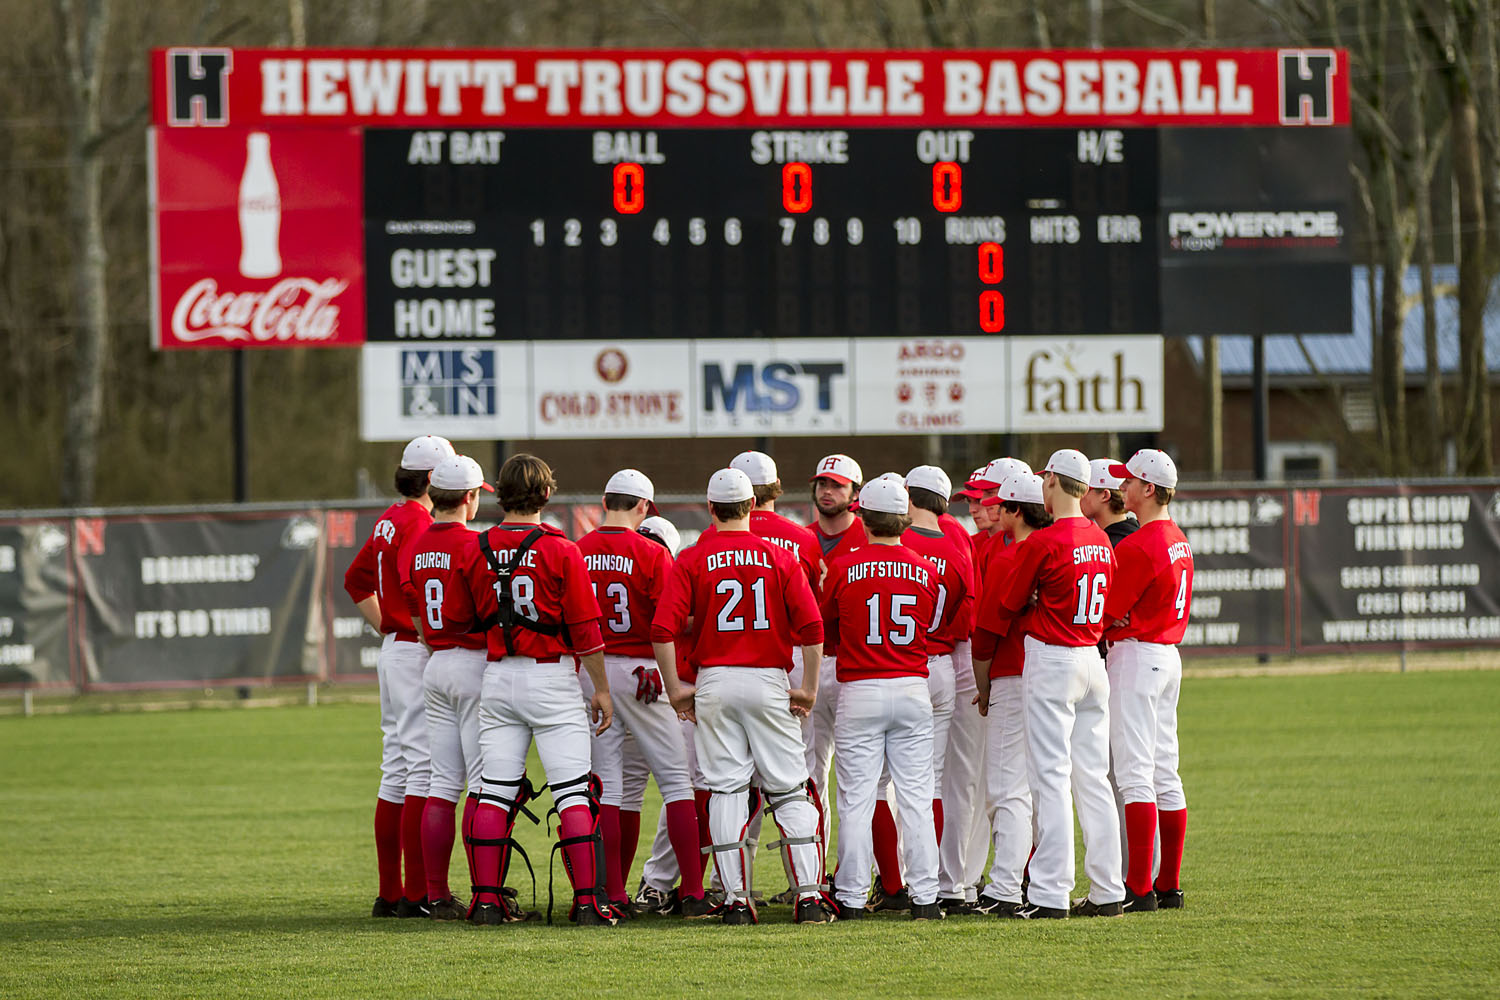 Hewitt-Trussville tops rankings in baseball, softball